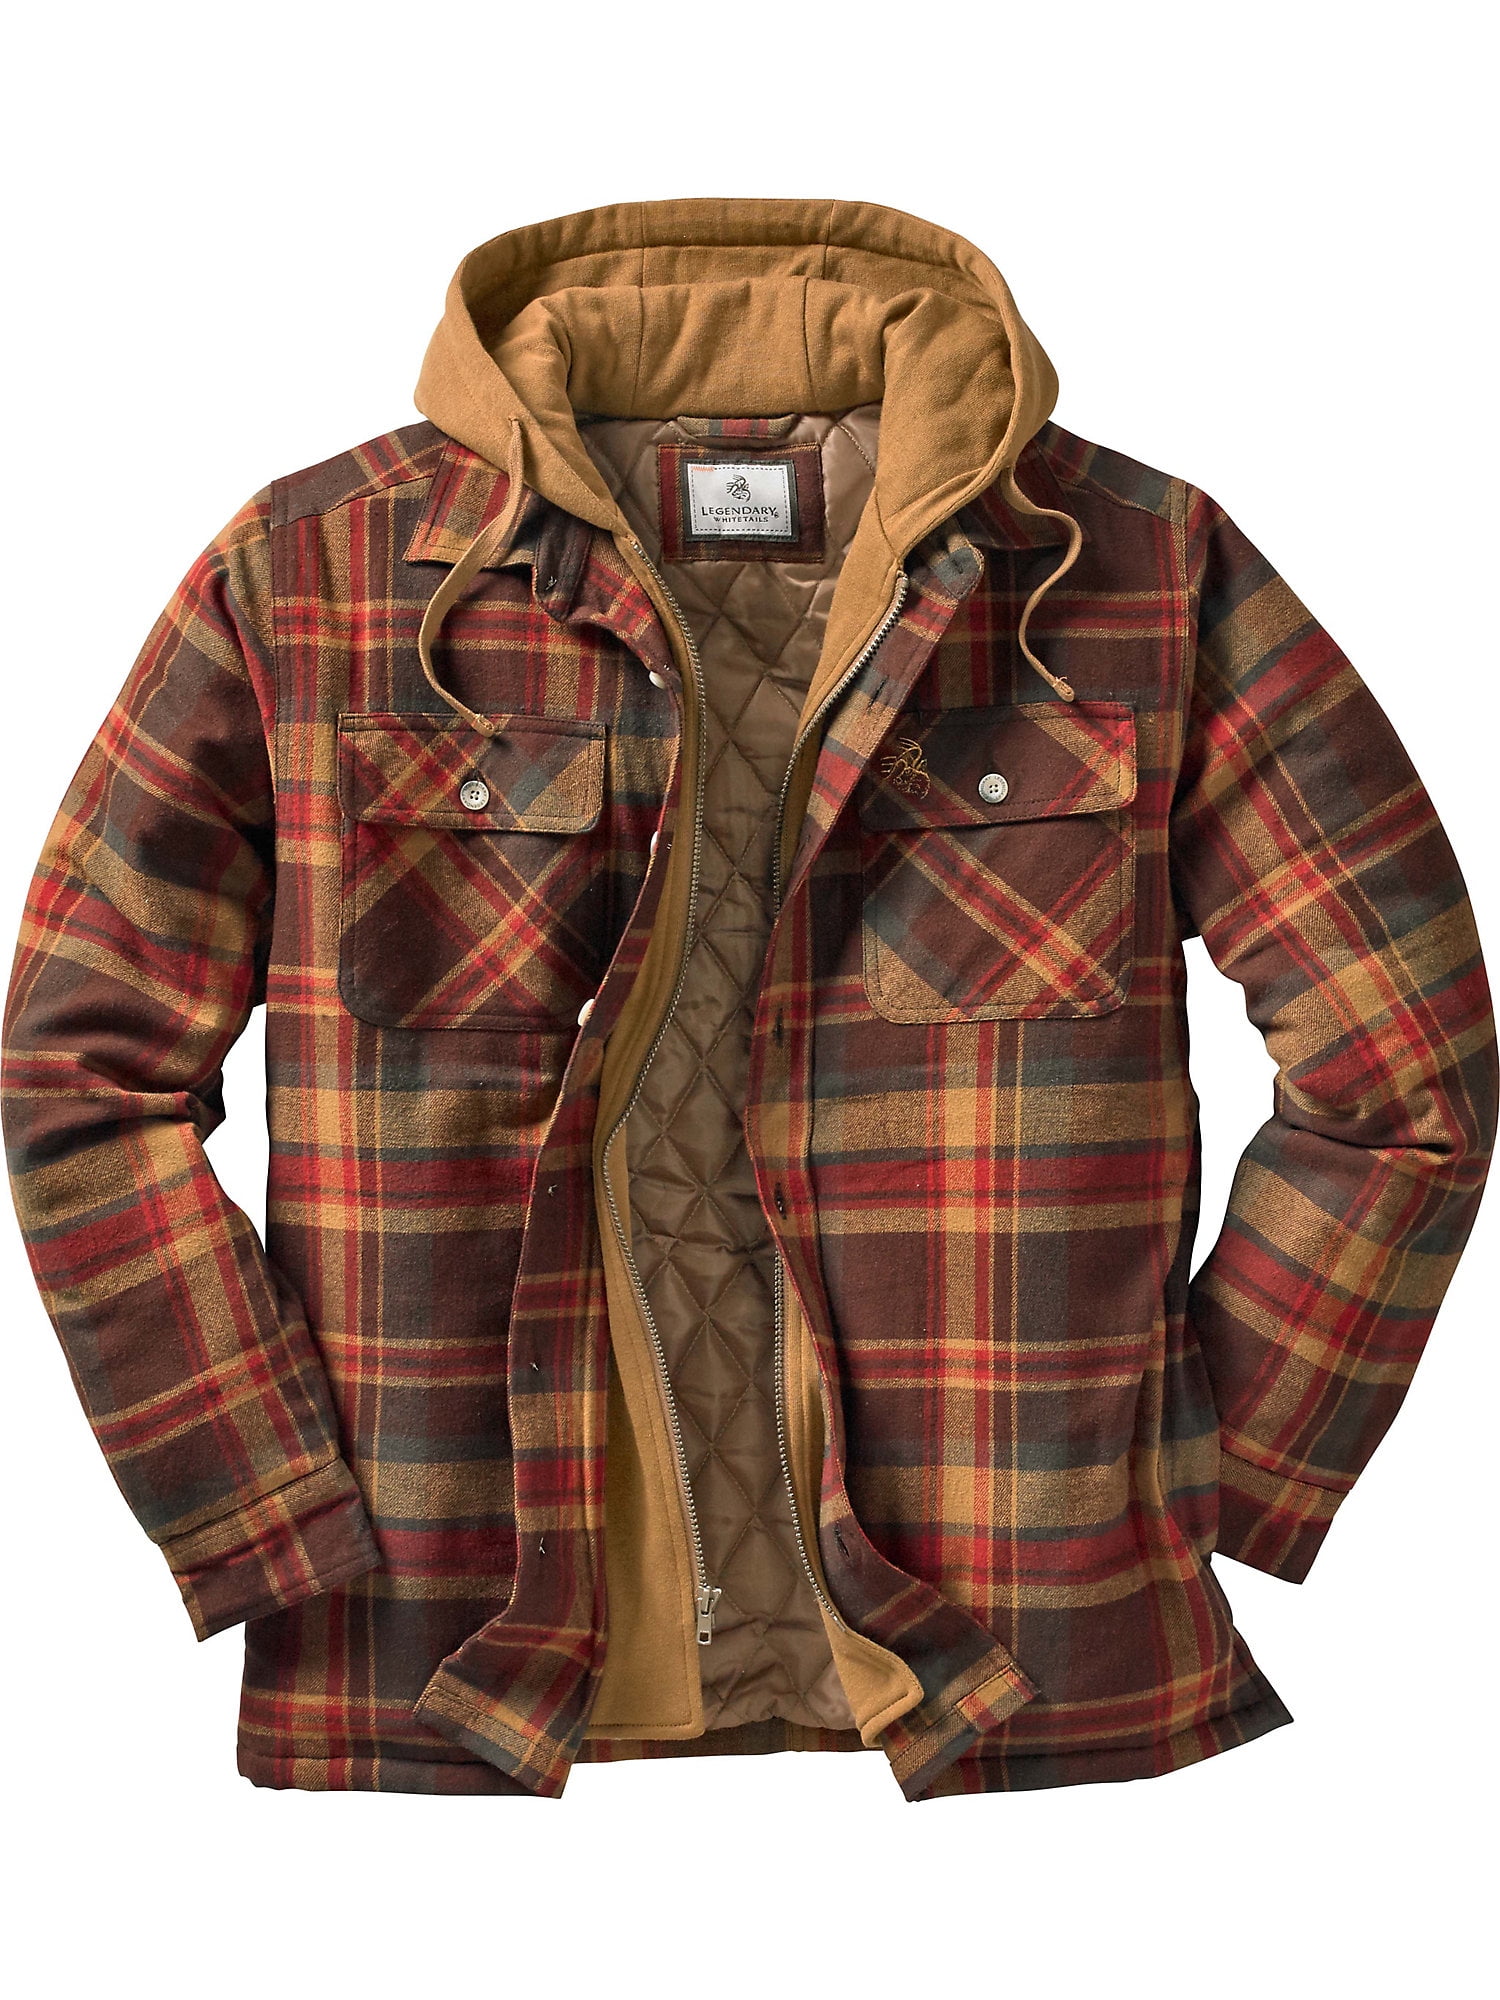 Legendary Whitetails Mens Maplewood Hooded Flannel Shirt Jacket